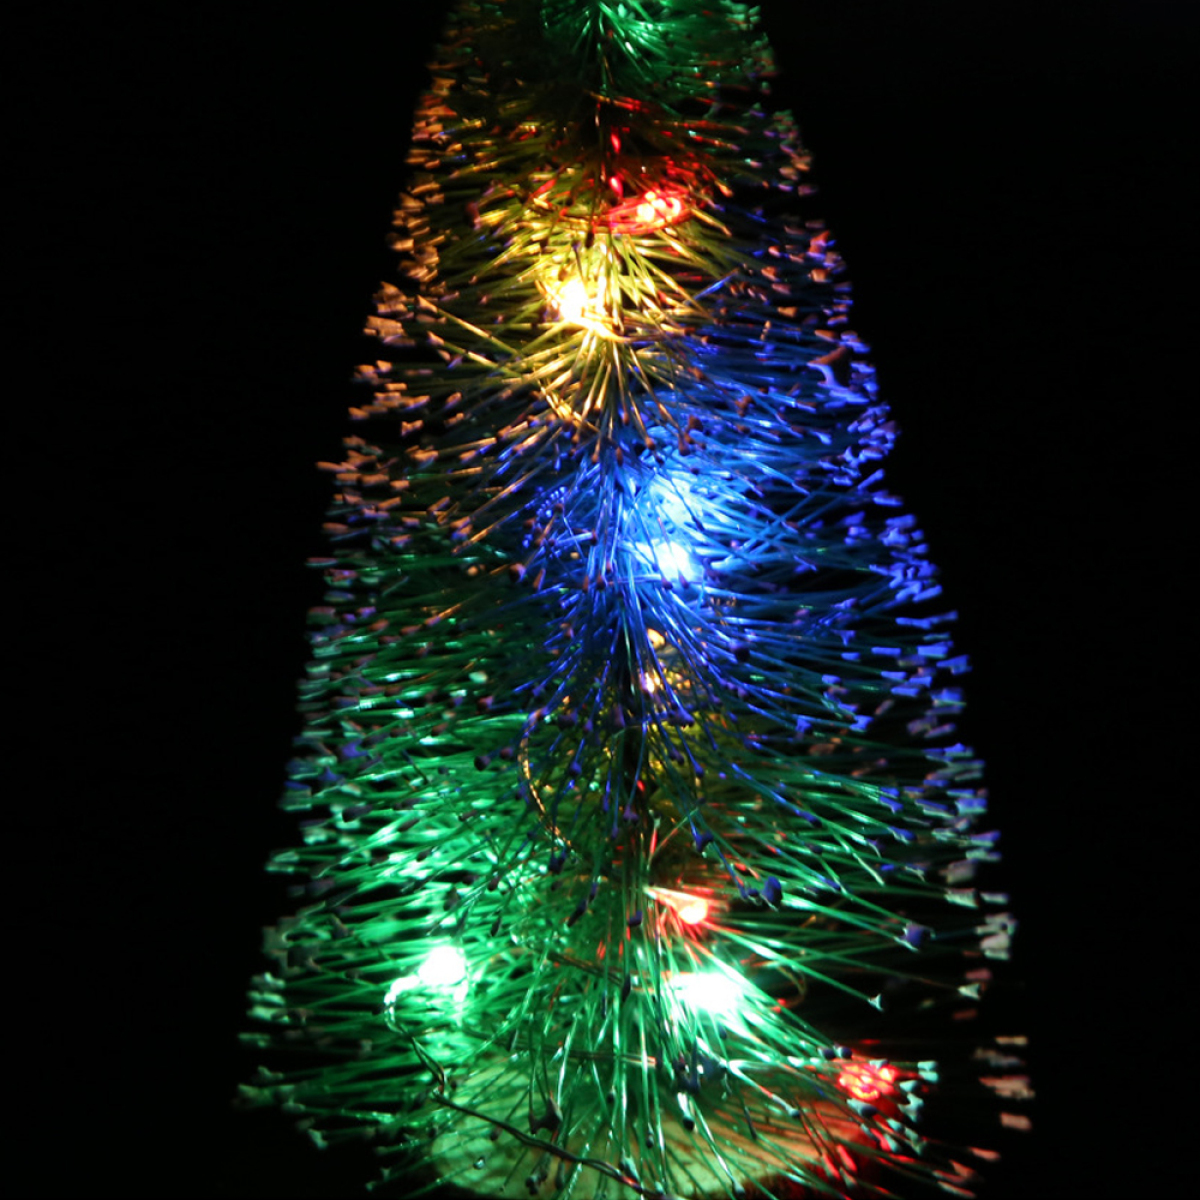 COZEVDNT Small Pine Weihnachtsdeko, Christmas Farbe Grün. Decor - Holiday Party Trees